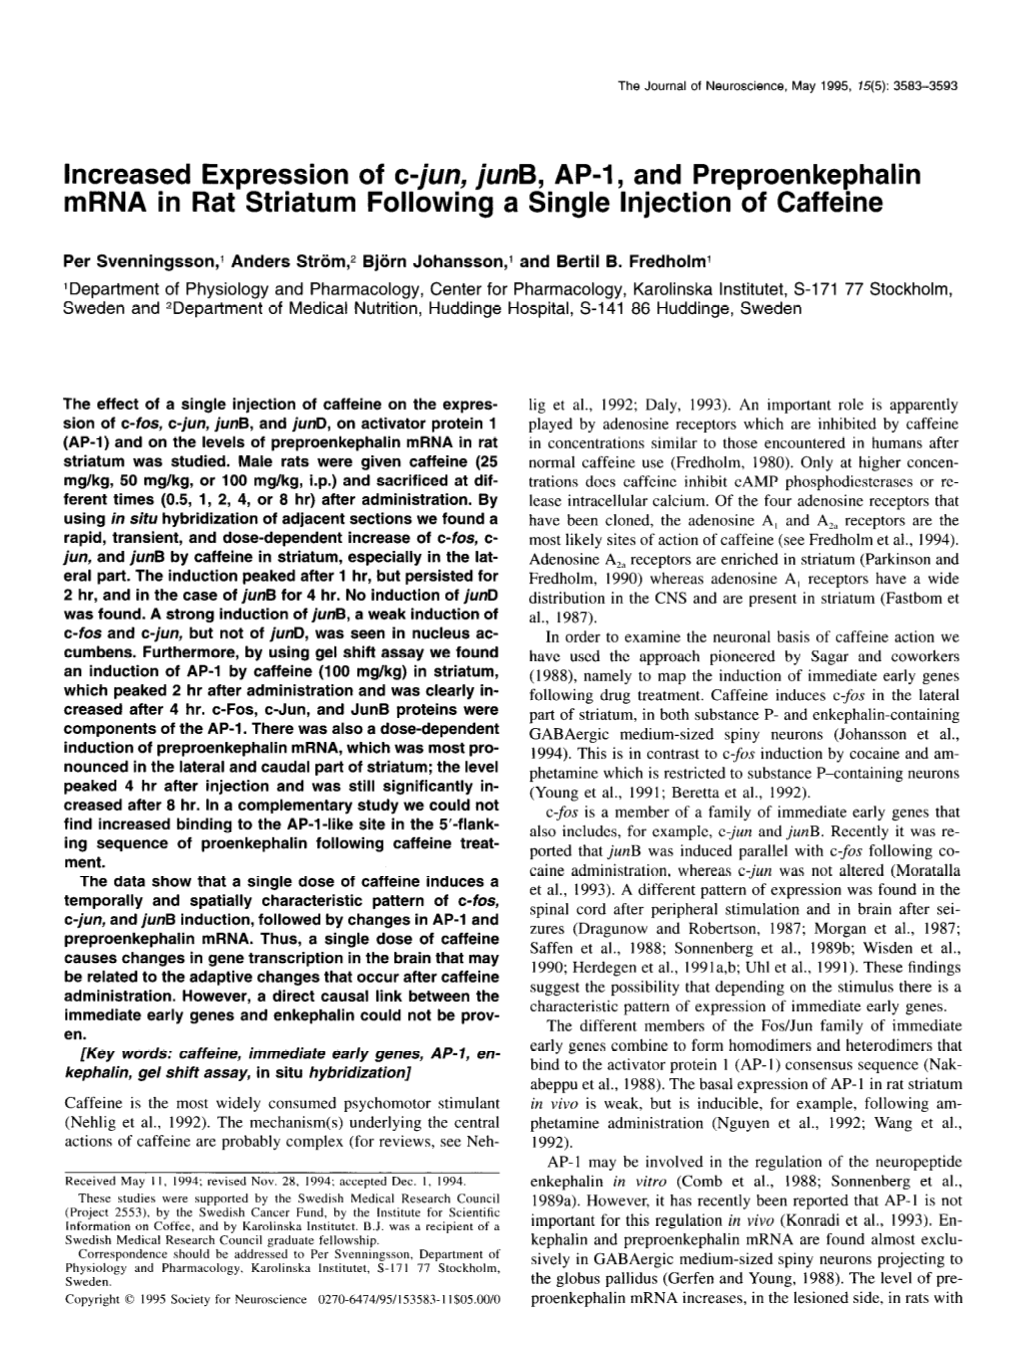 Increased Expression of C-Jun, Junb, AP-1, and Preproenkephalin Mrna in Rat Striatum Following a Single Injection of Caffeine